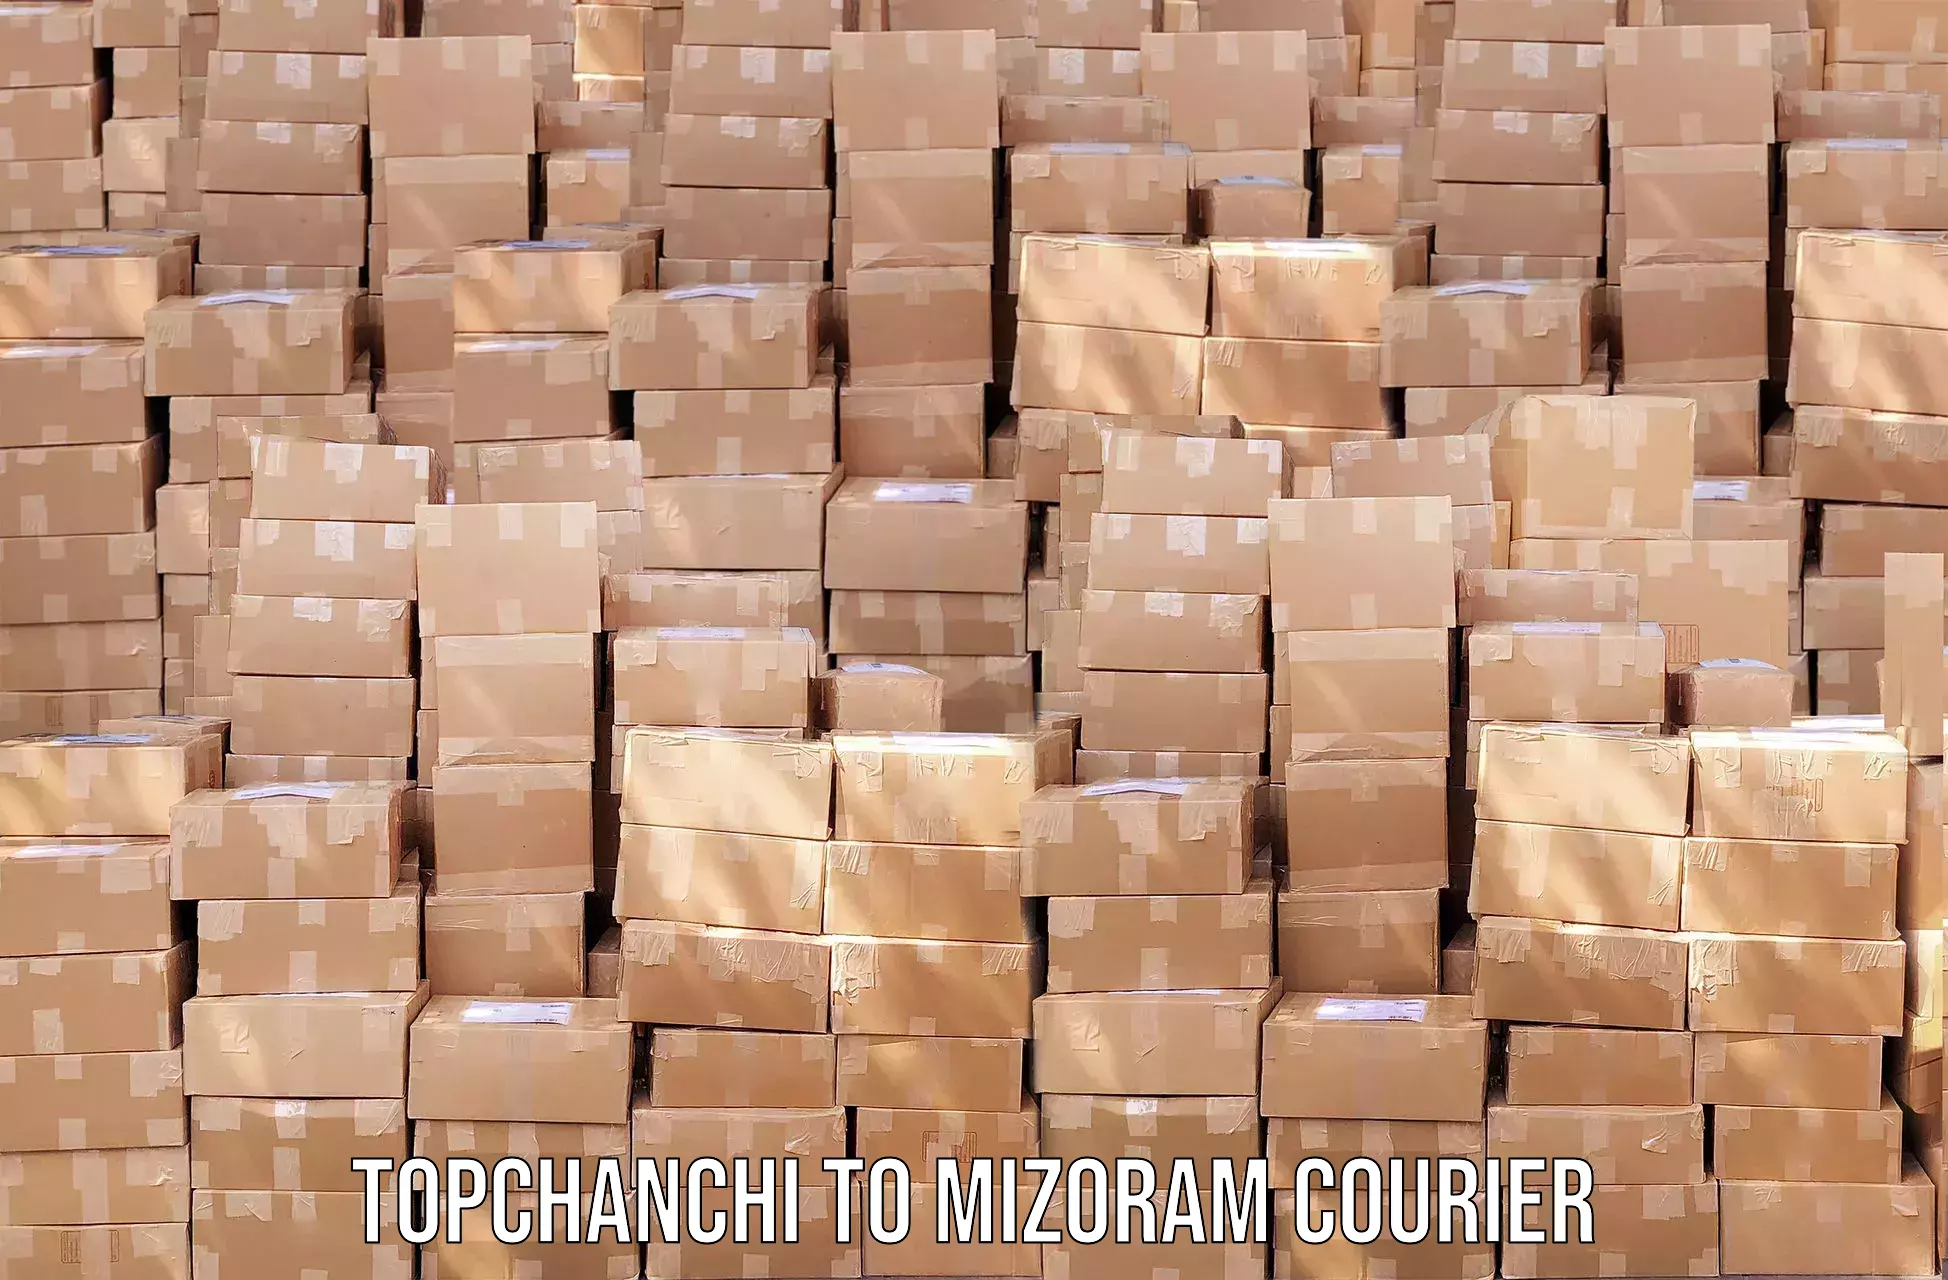 Courier service comparison Topchanchi to Saitual